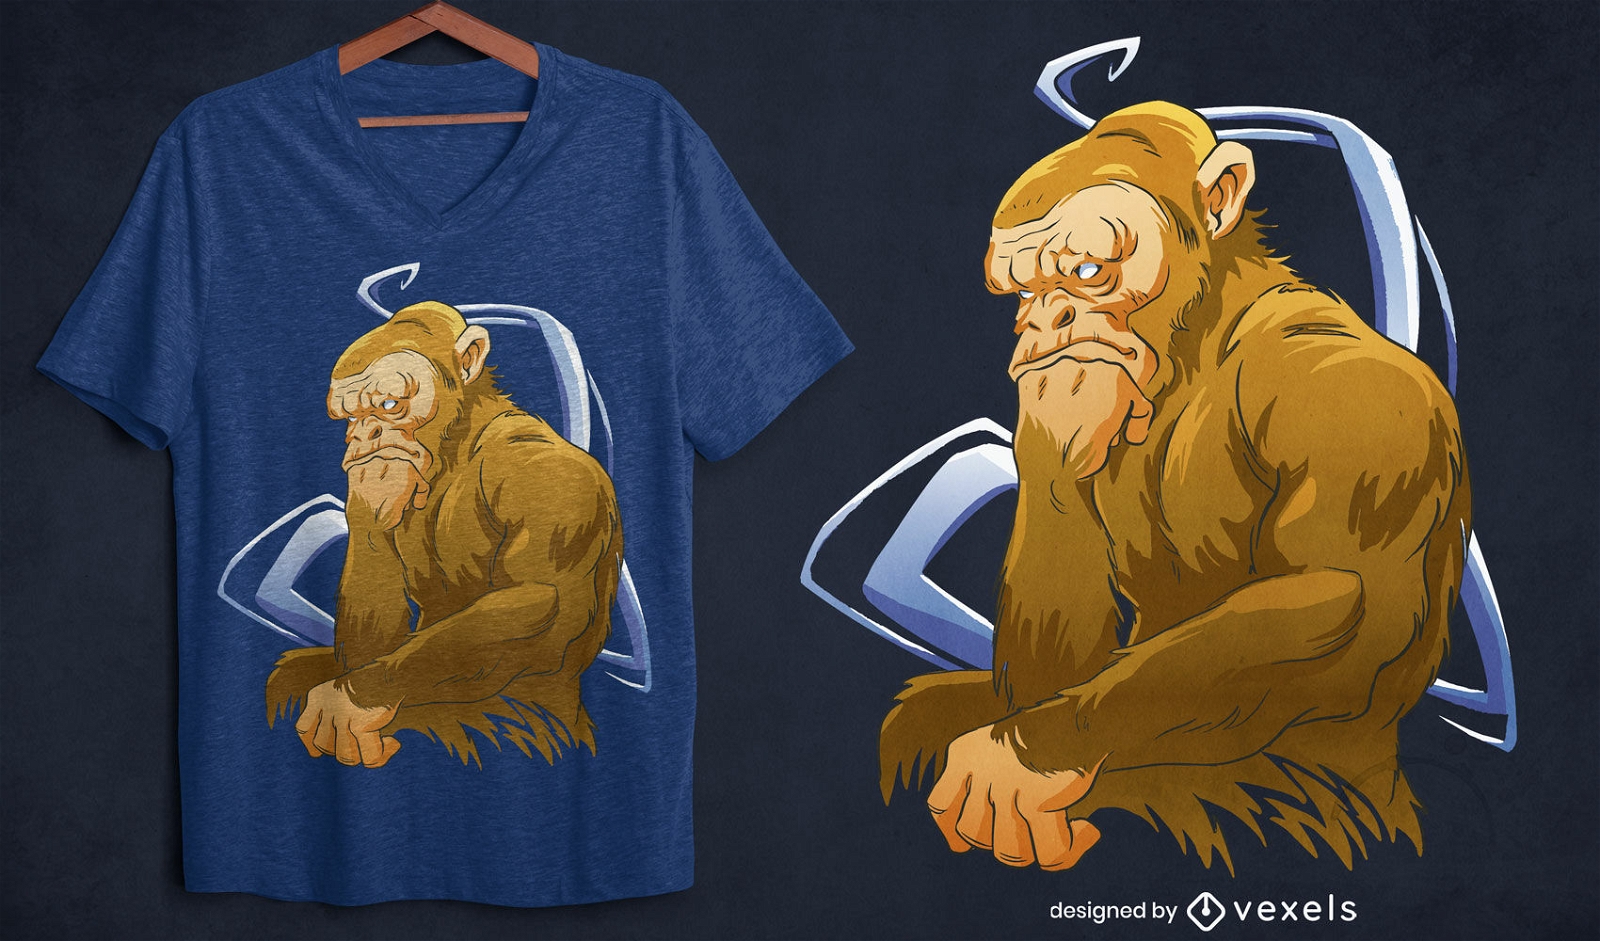 Chimpanzee character t-shirt design